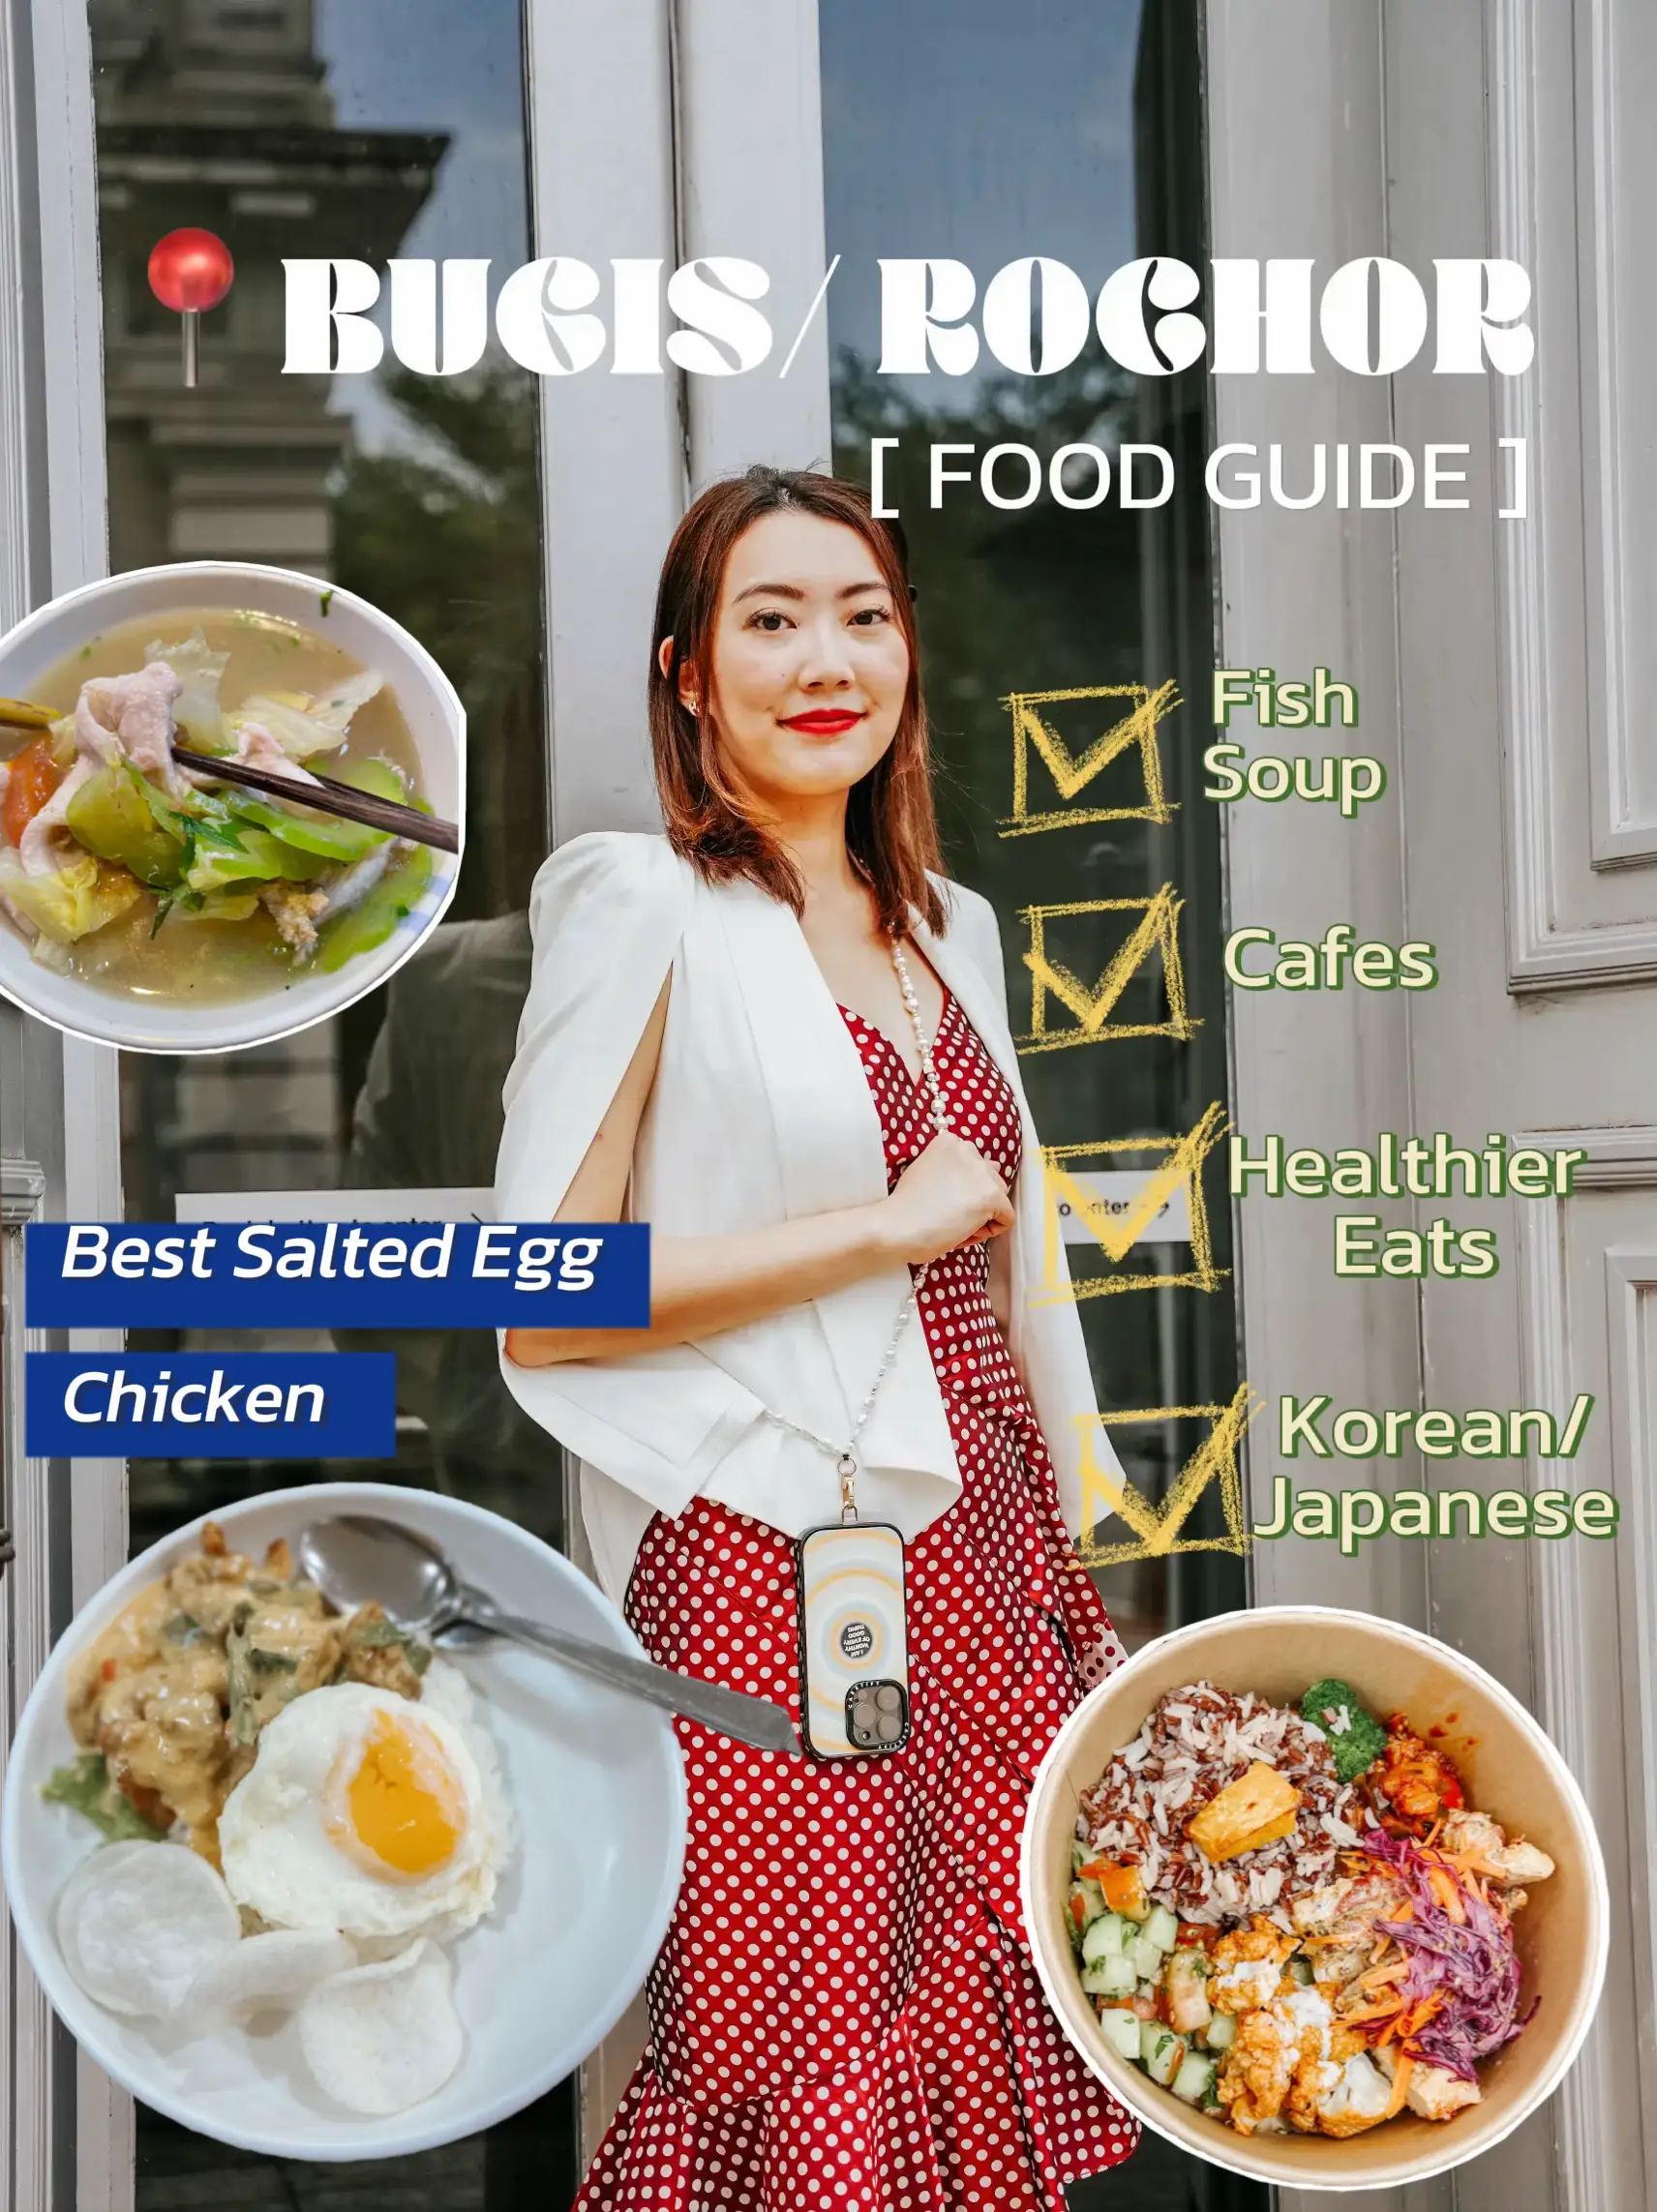 📍BUGIS/ ROCHOR Top Food Recommendations's images(0)